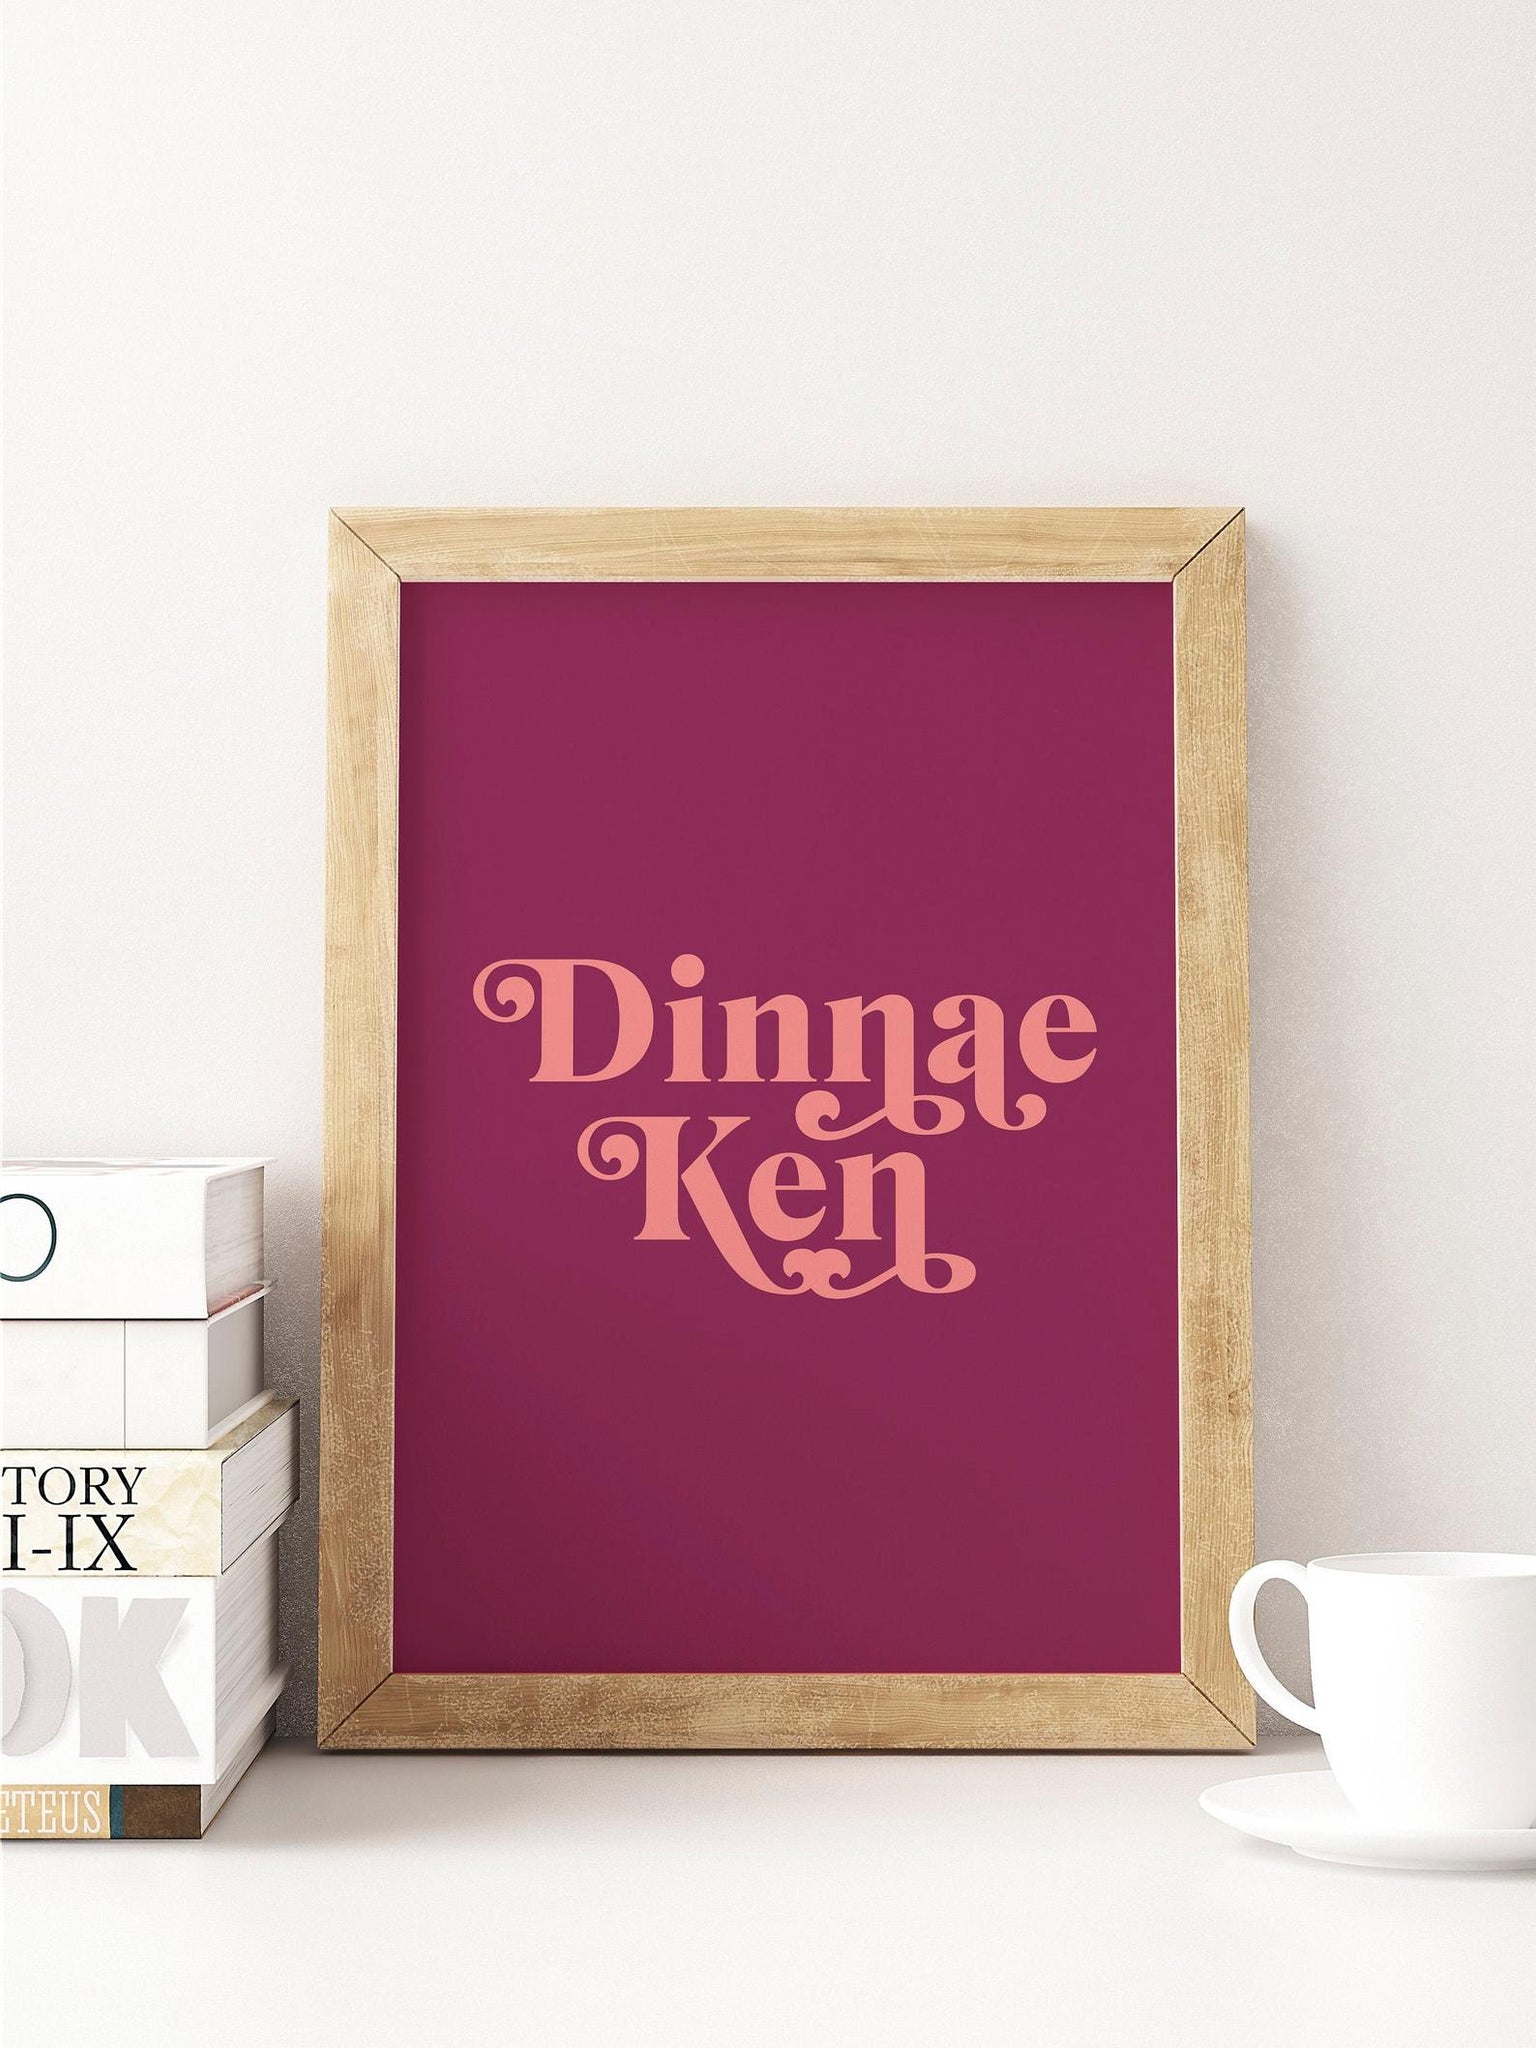 Dinnae Ken Scottish Slang Colour Unframed Print